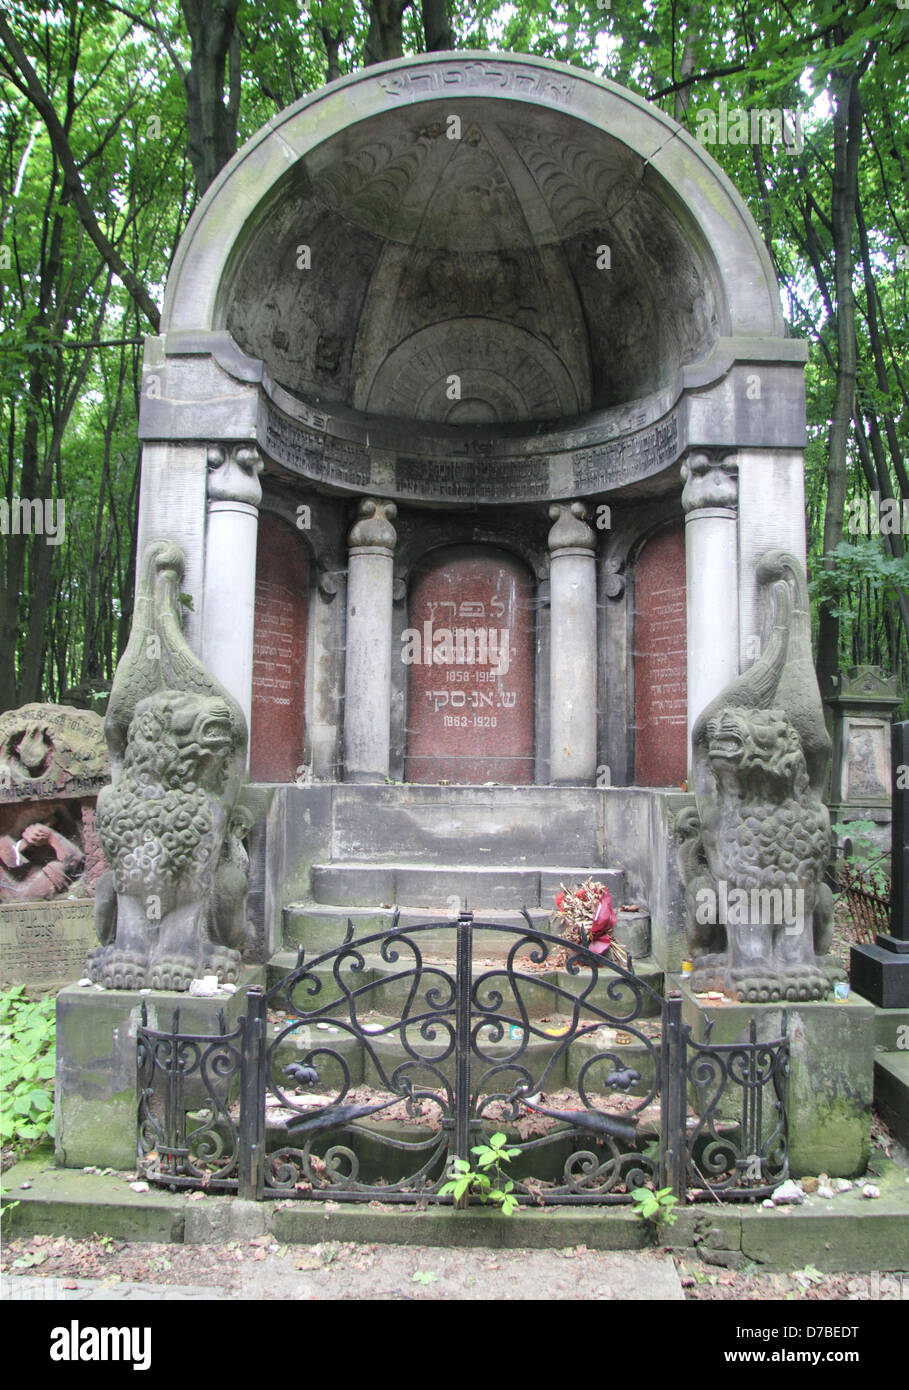 Mausoleum of the Three Writers (Peretz, Dinezon, and Ansky) in Warsaw, Poland Stock Photo